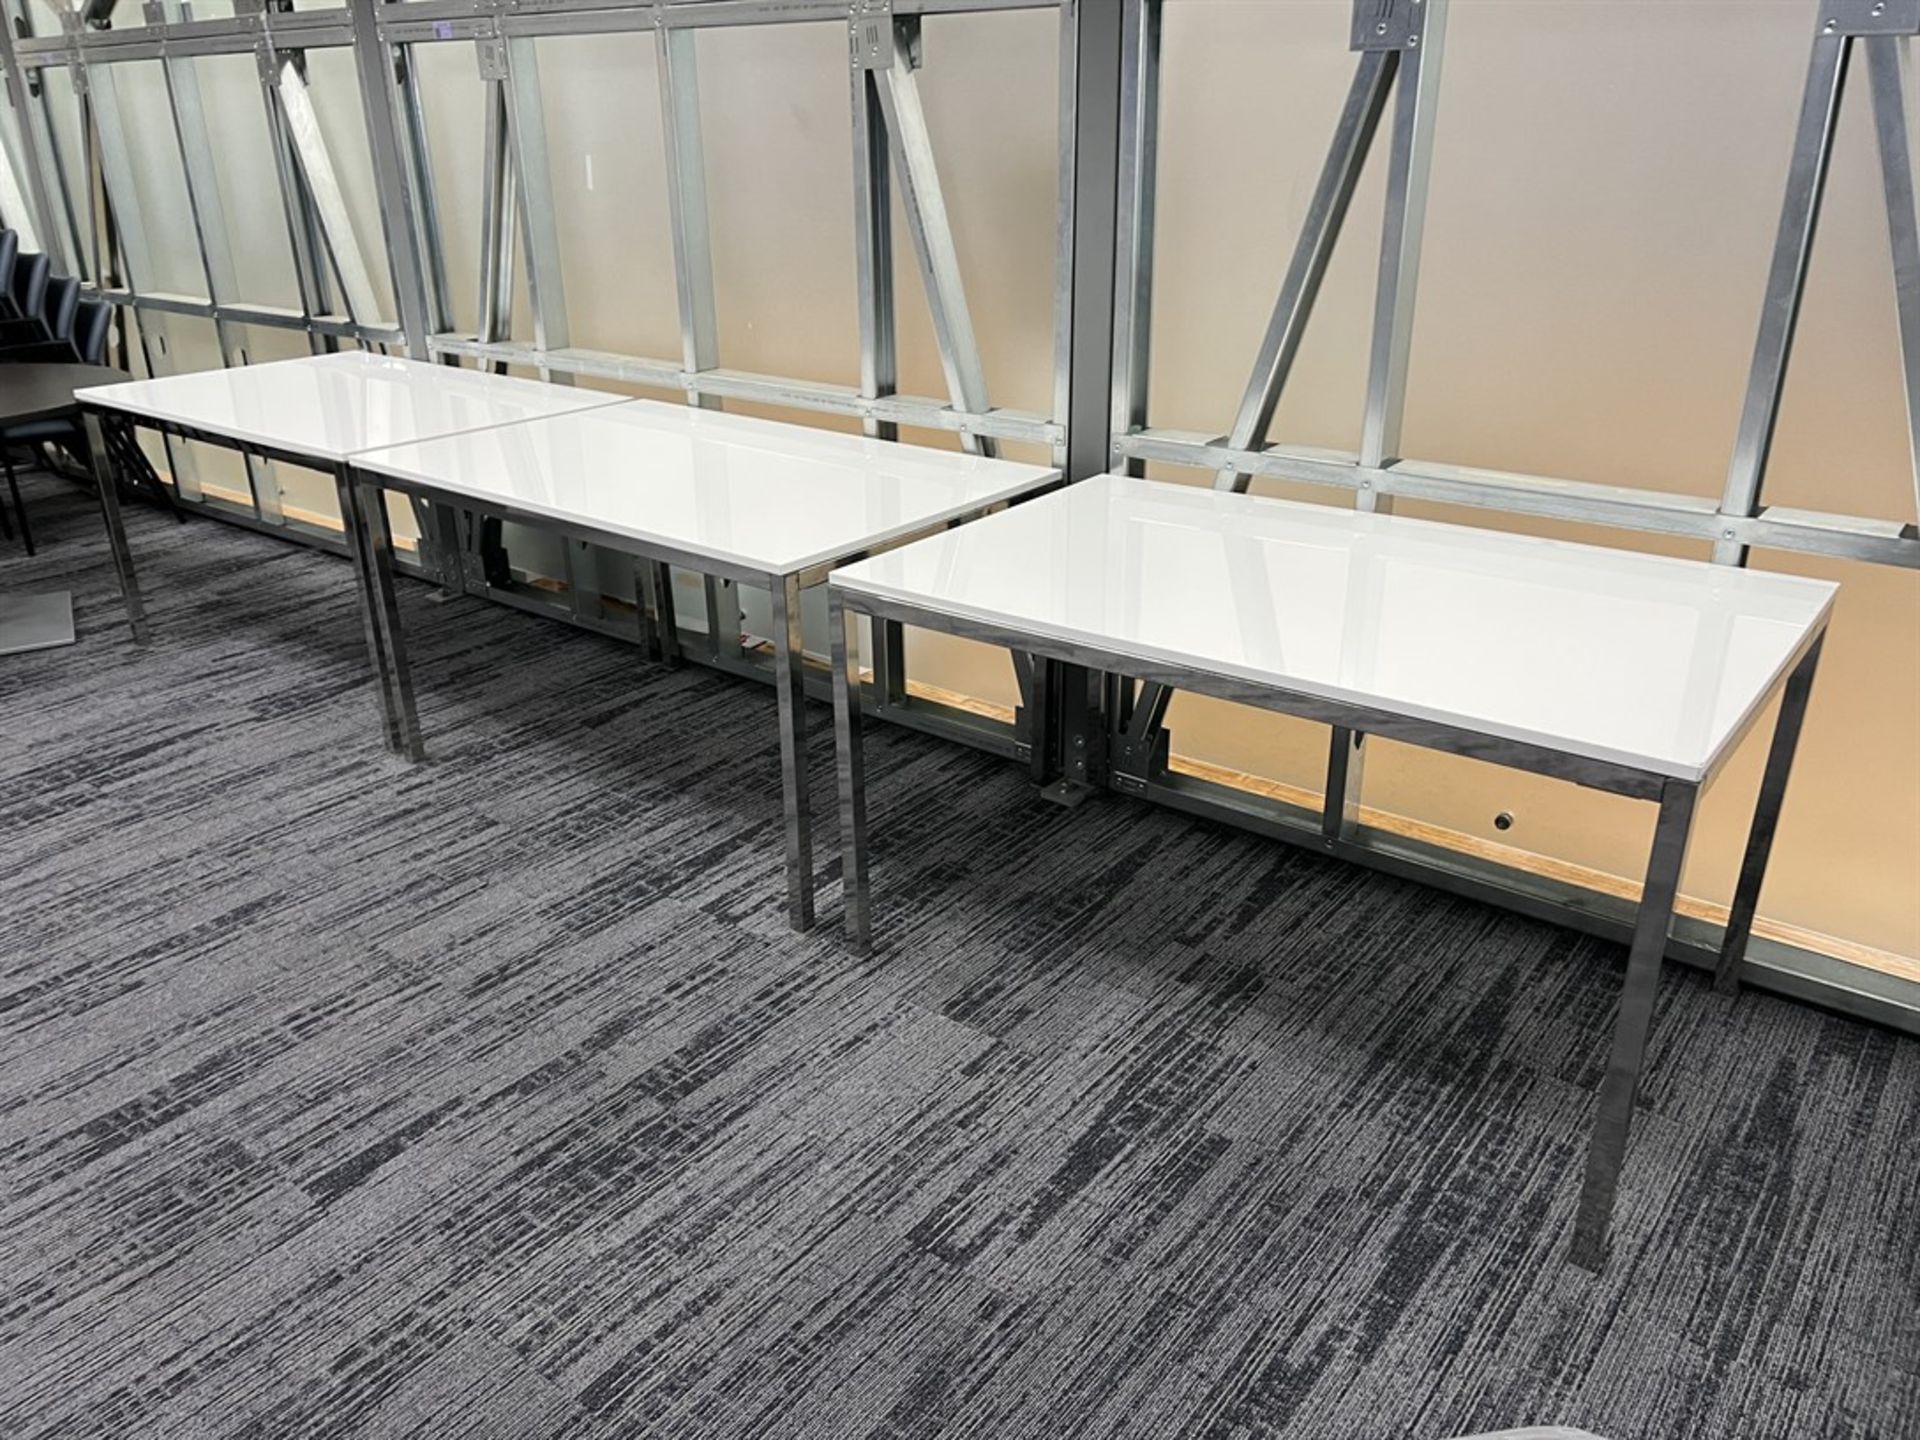 Lot of (3) Break Room Tables, 33.5" x 53"